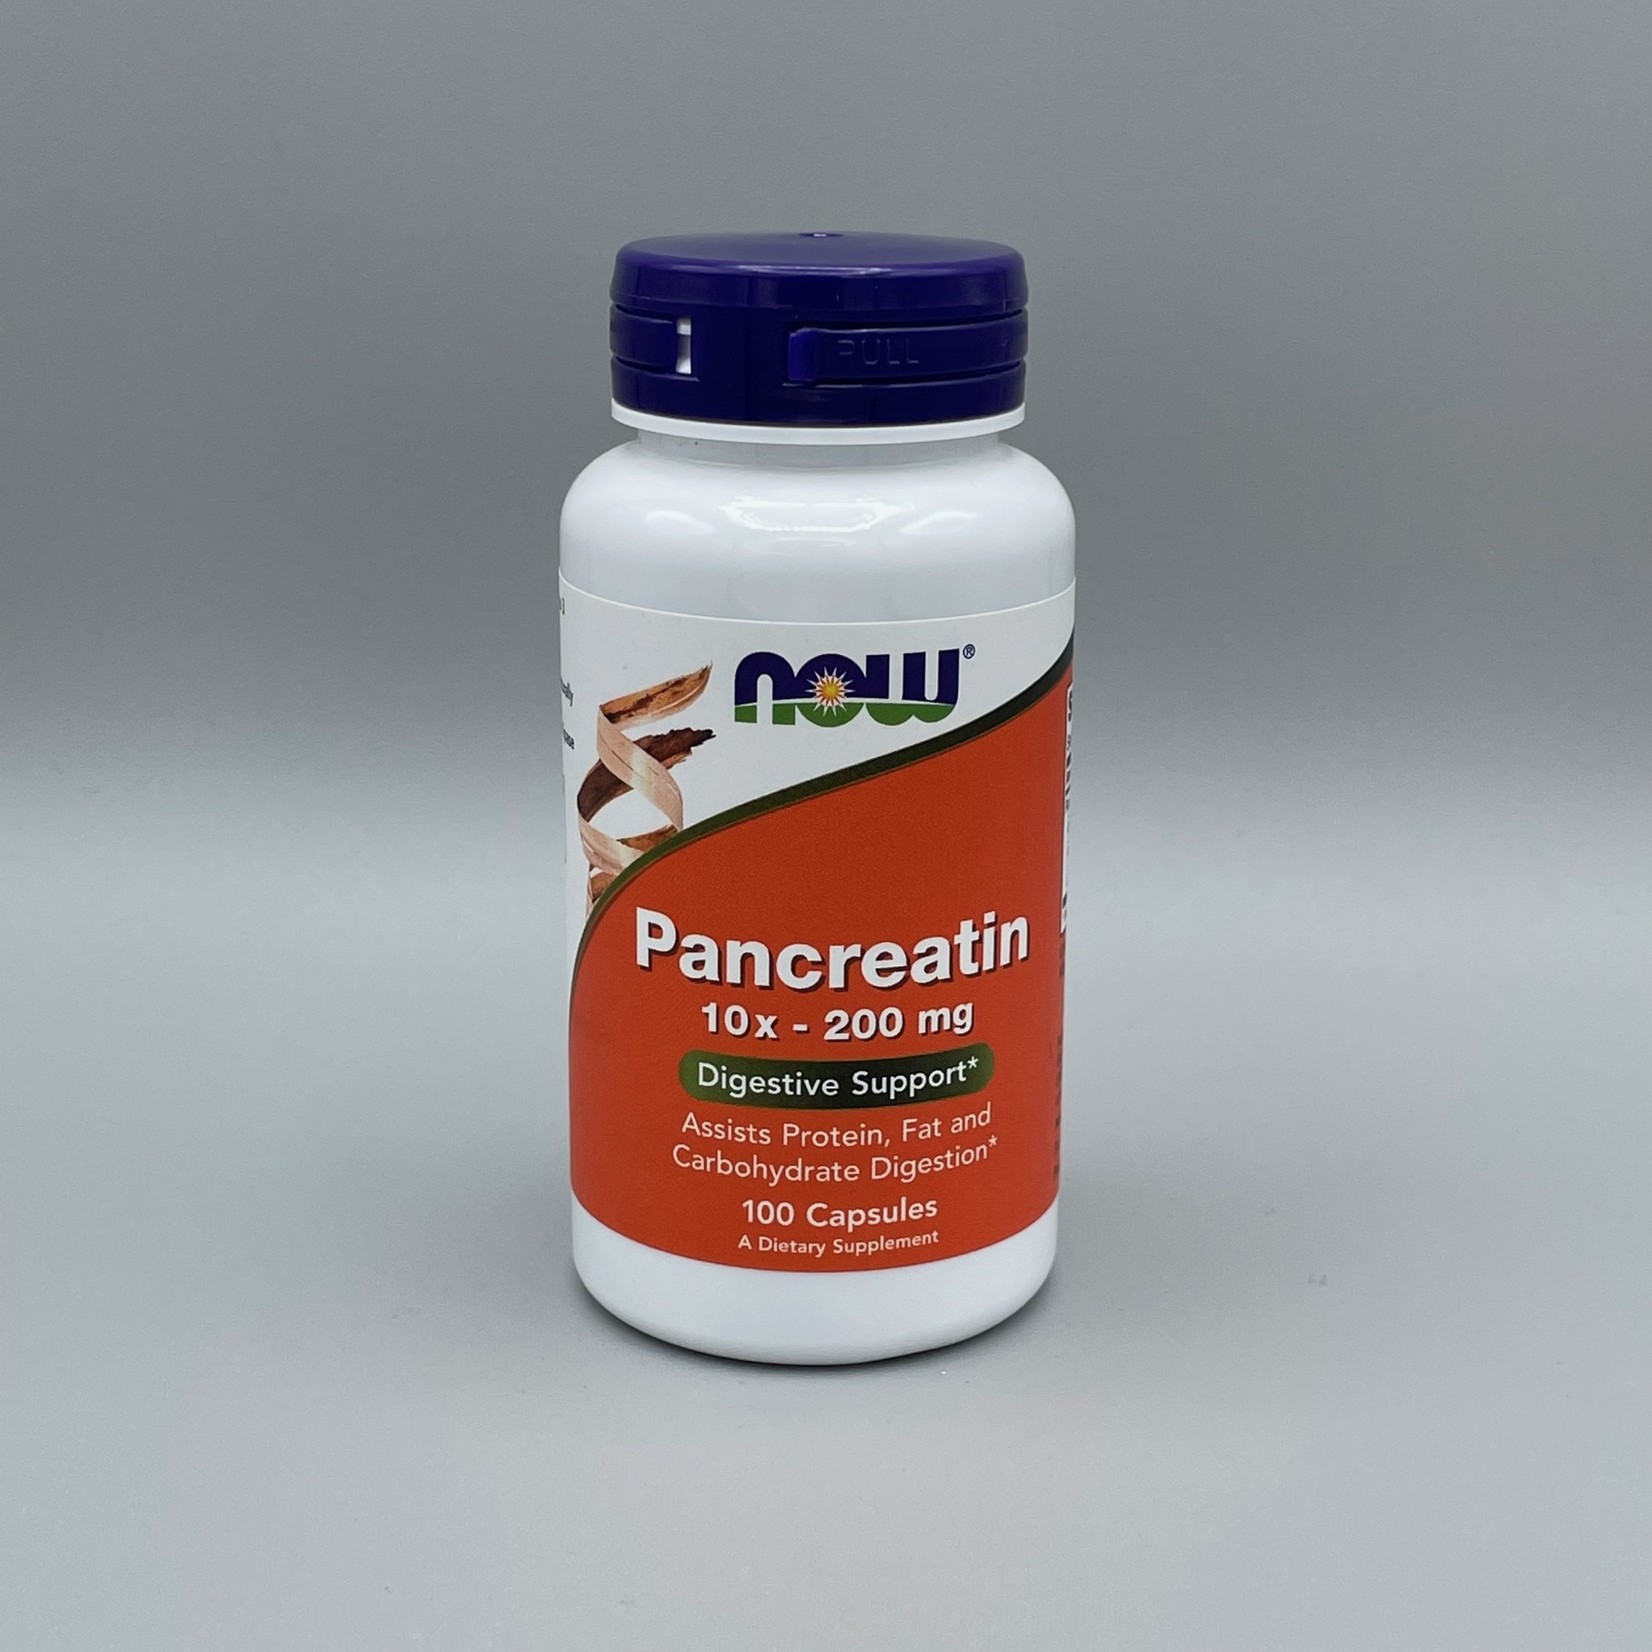 NOW NOW Pancreatin (10x) - 200 mg, 100 Capsules